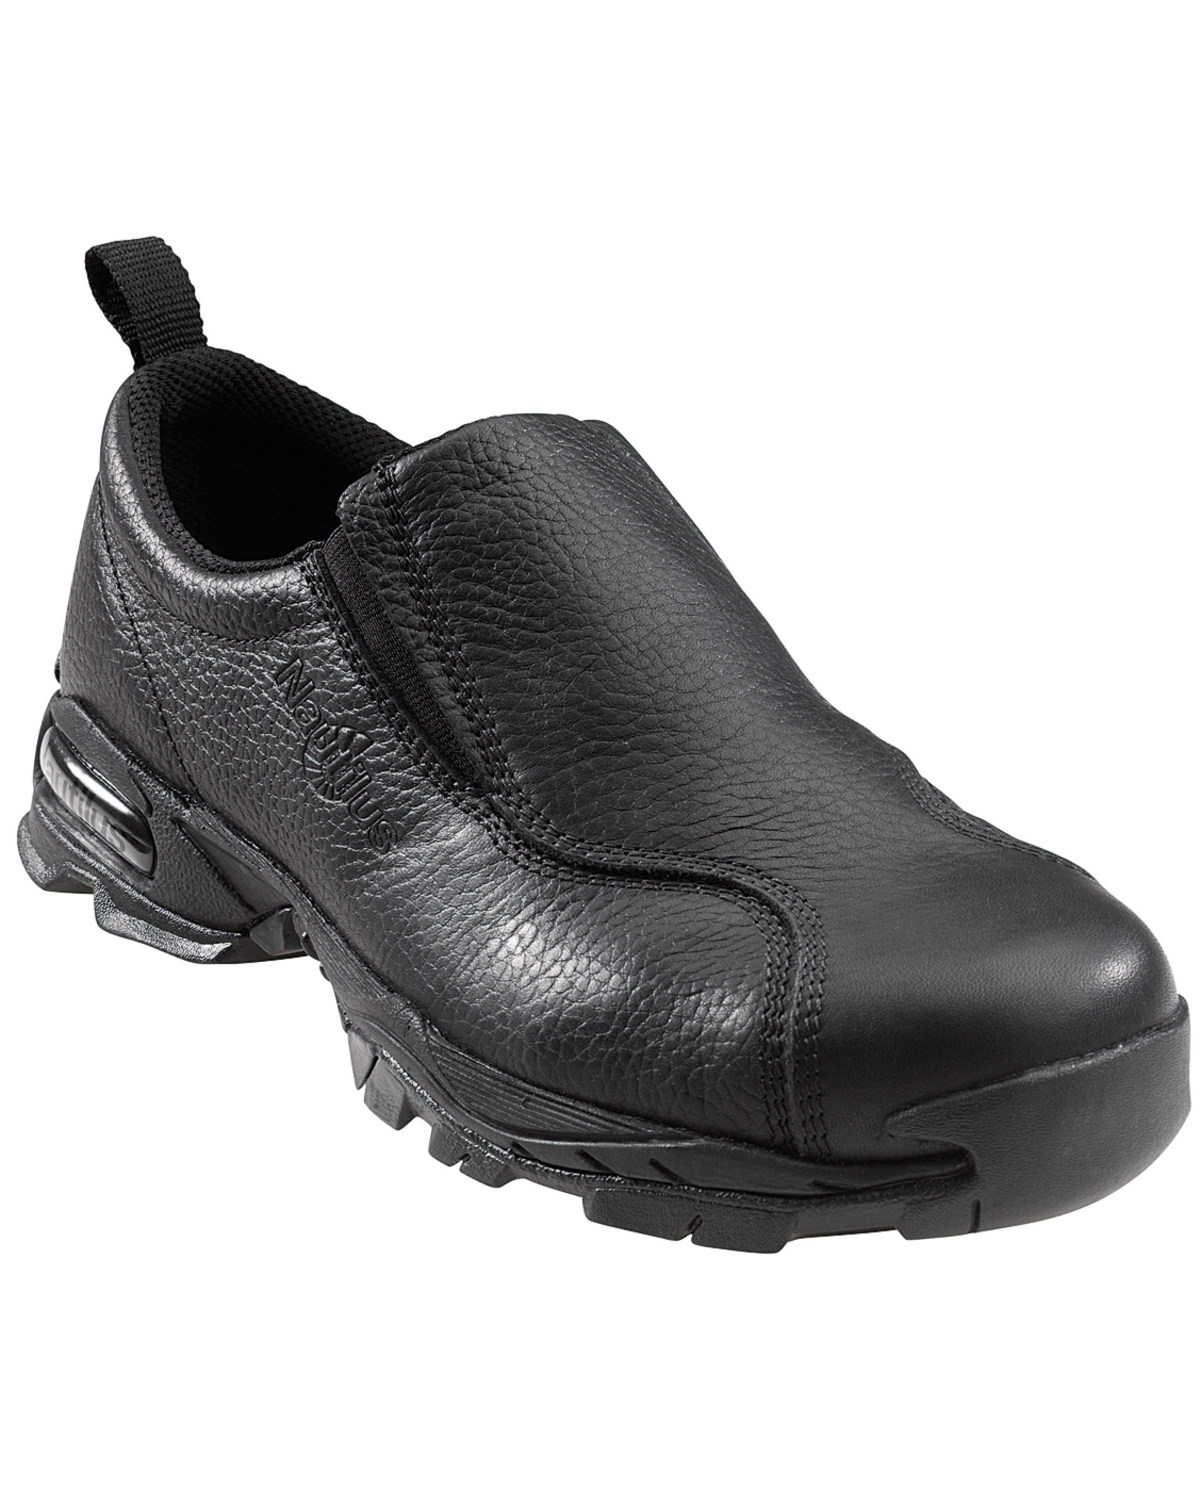 Nautilus Women's ESD Slip-On Work Shoes - Steel Toe